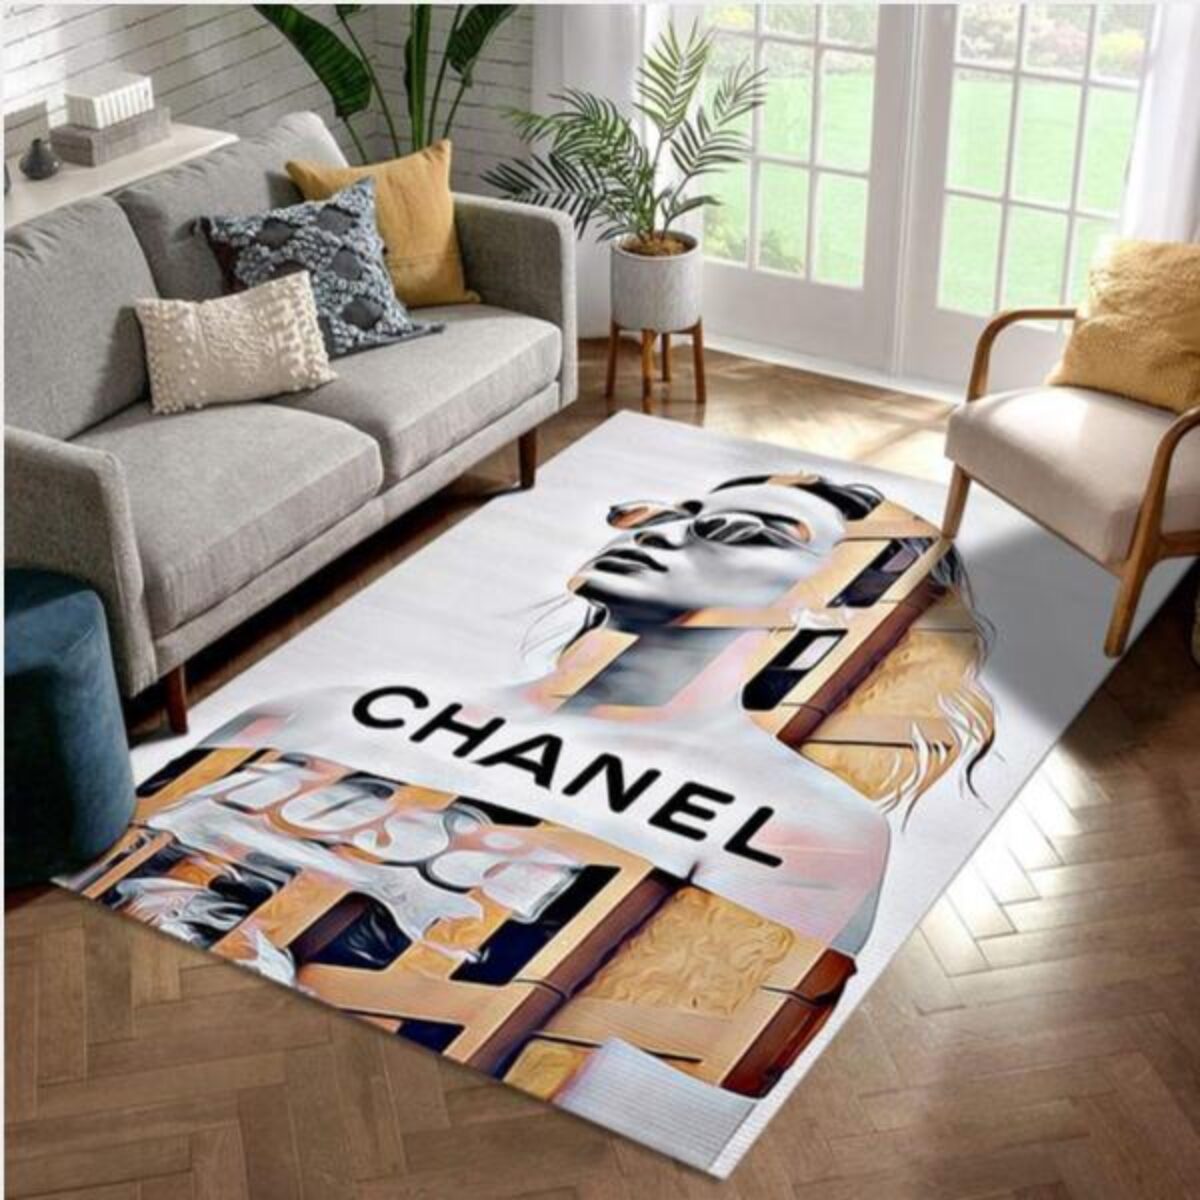 Chanel Night Sky Luxury Brand Carpet Rug Limited Edition - Horusteez